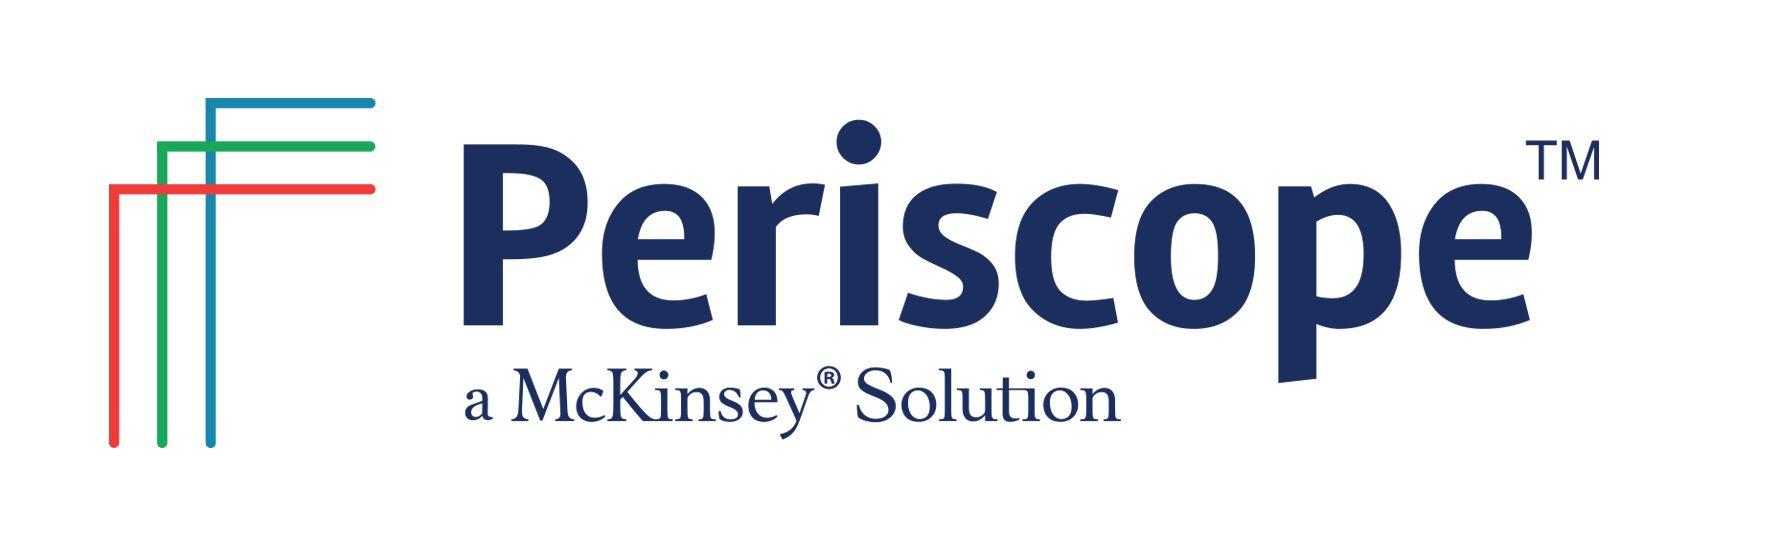 McKinsey Logo - Periscope Logo | RealWire RealResource